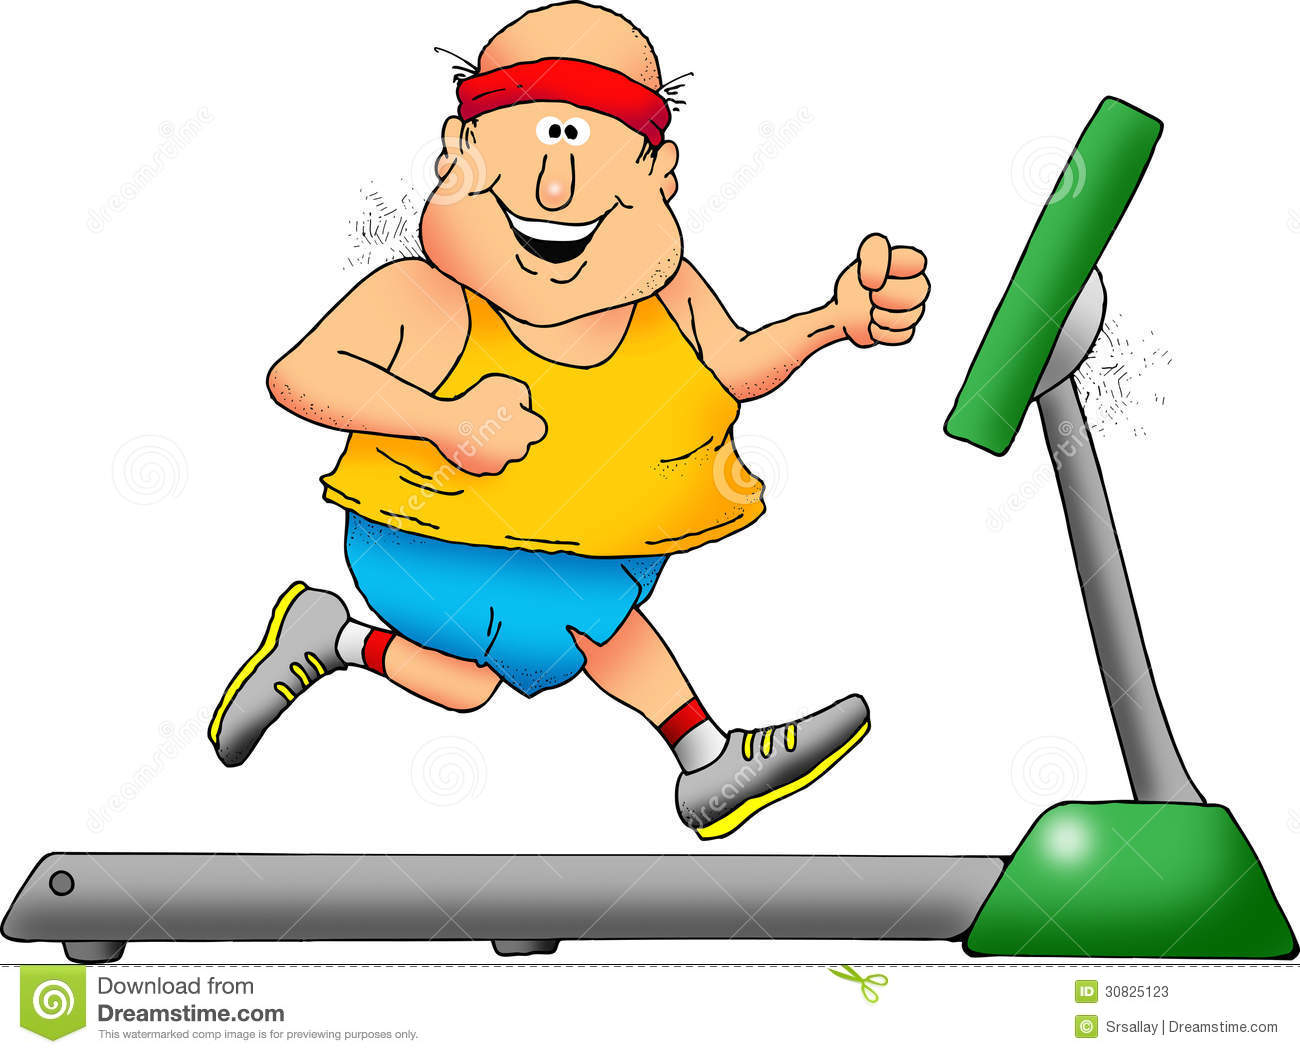 Cartoon Of A Smiling Chubby Man On A Treadmill